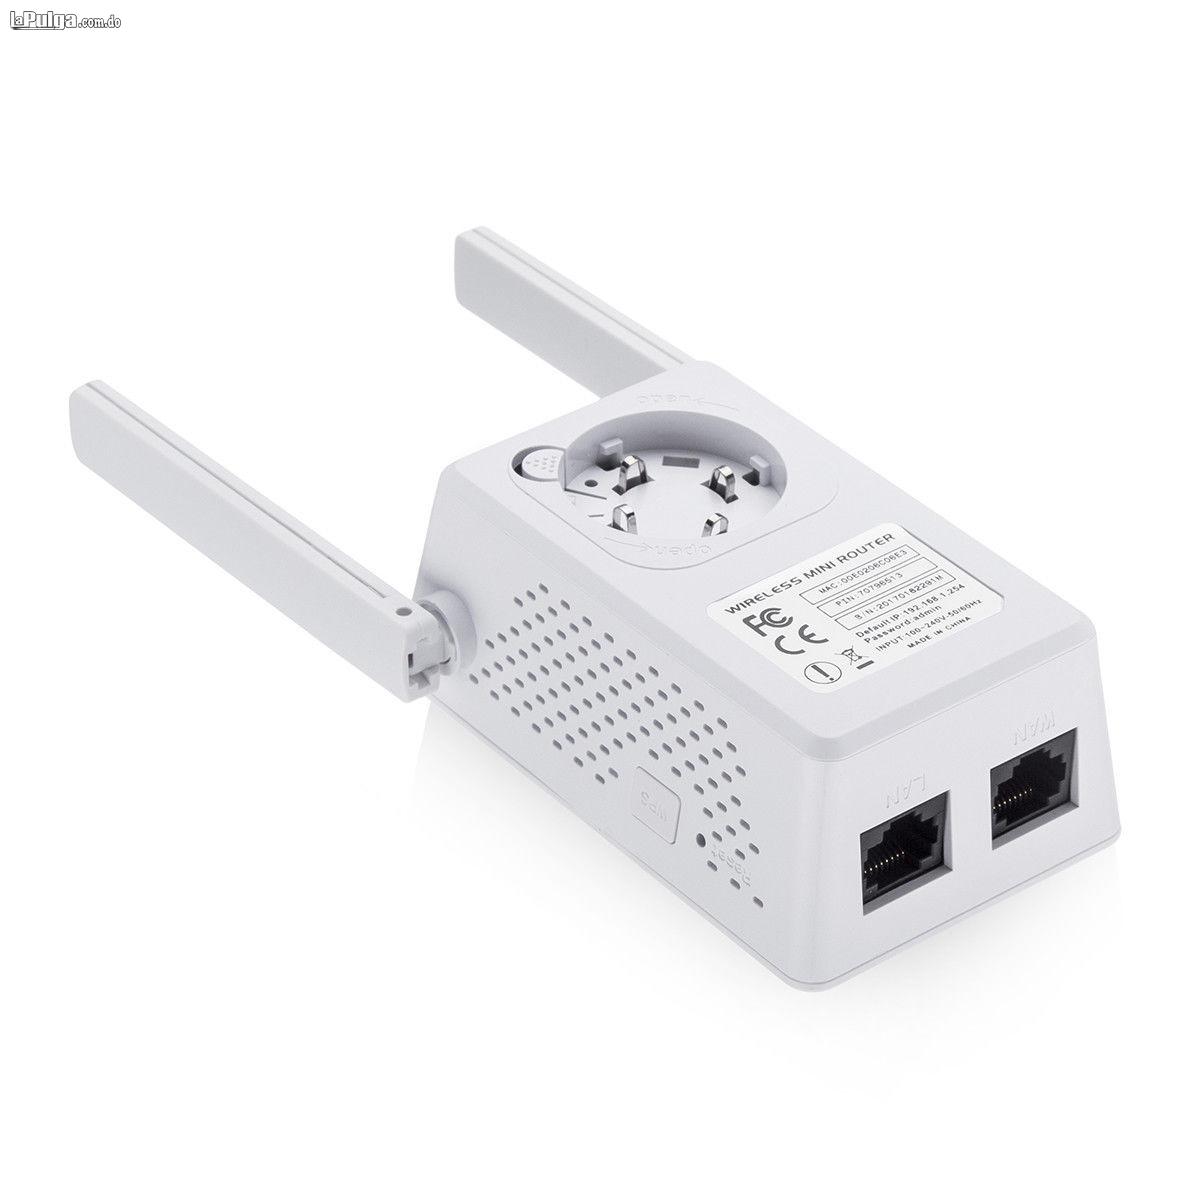 Router Repetidor Wifi Amplificador Doble Antena 300mbs Avanzado Foto 6566363-3.jpg